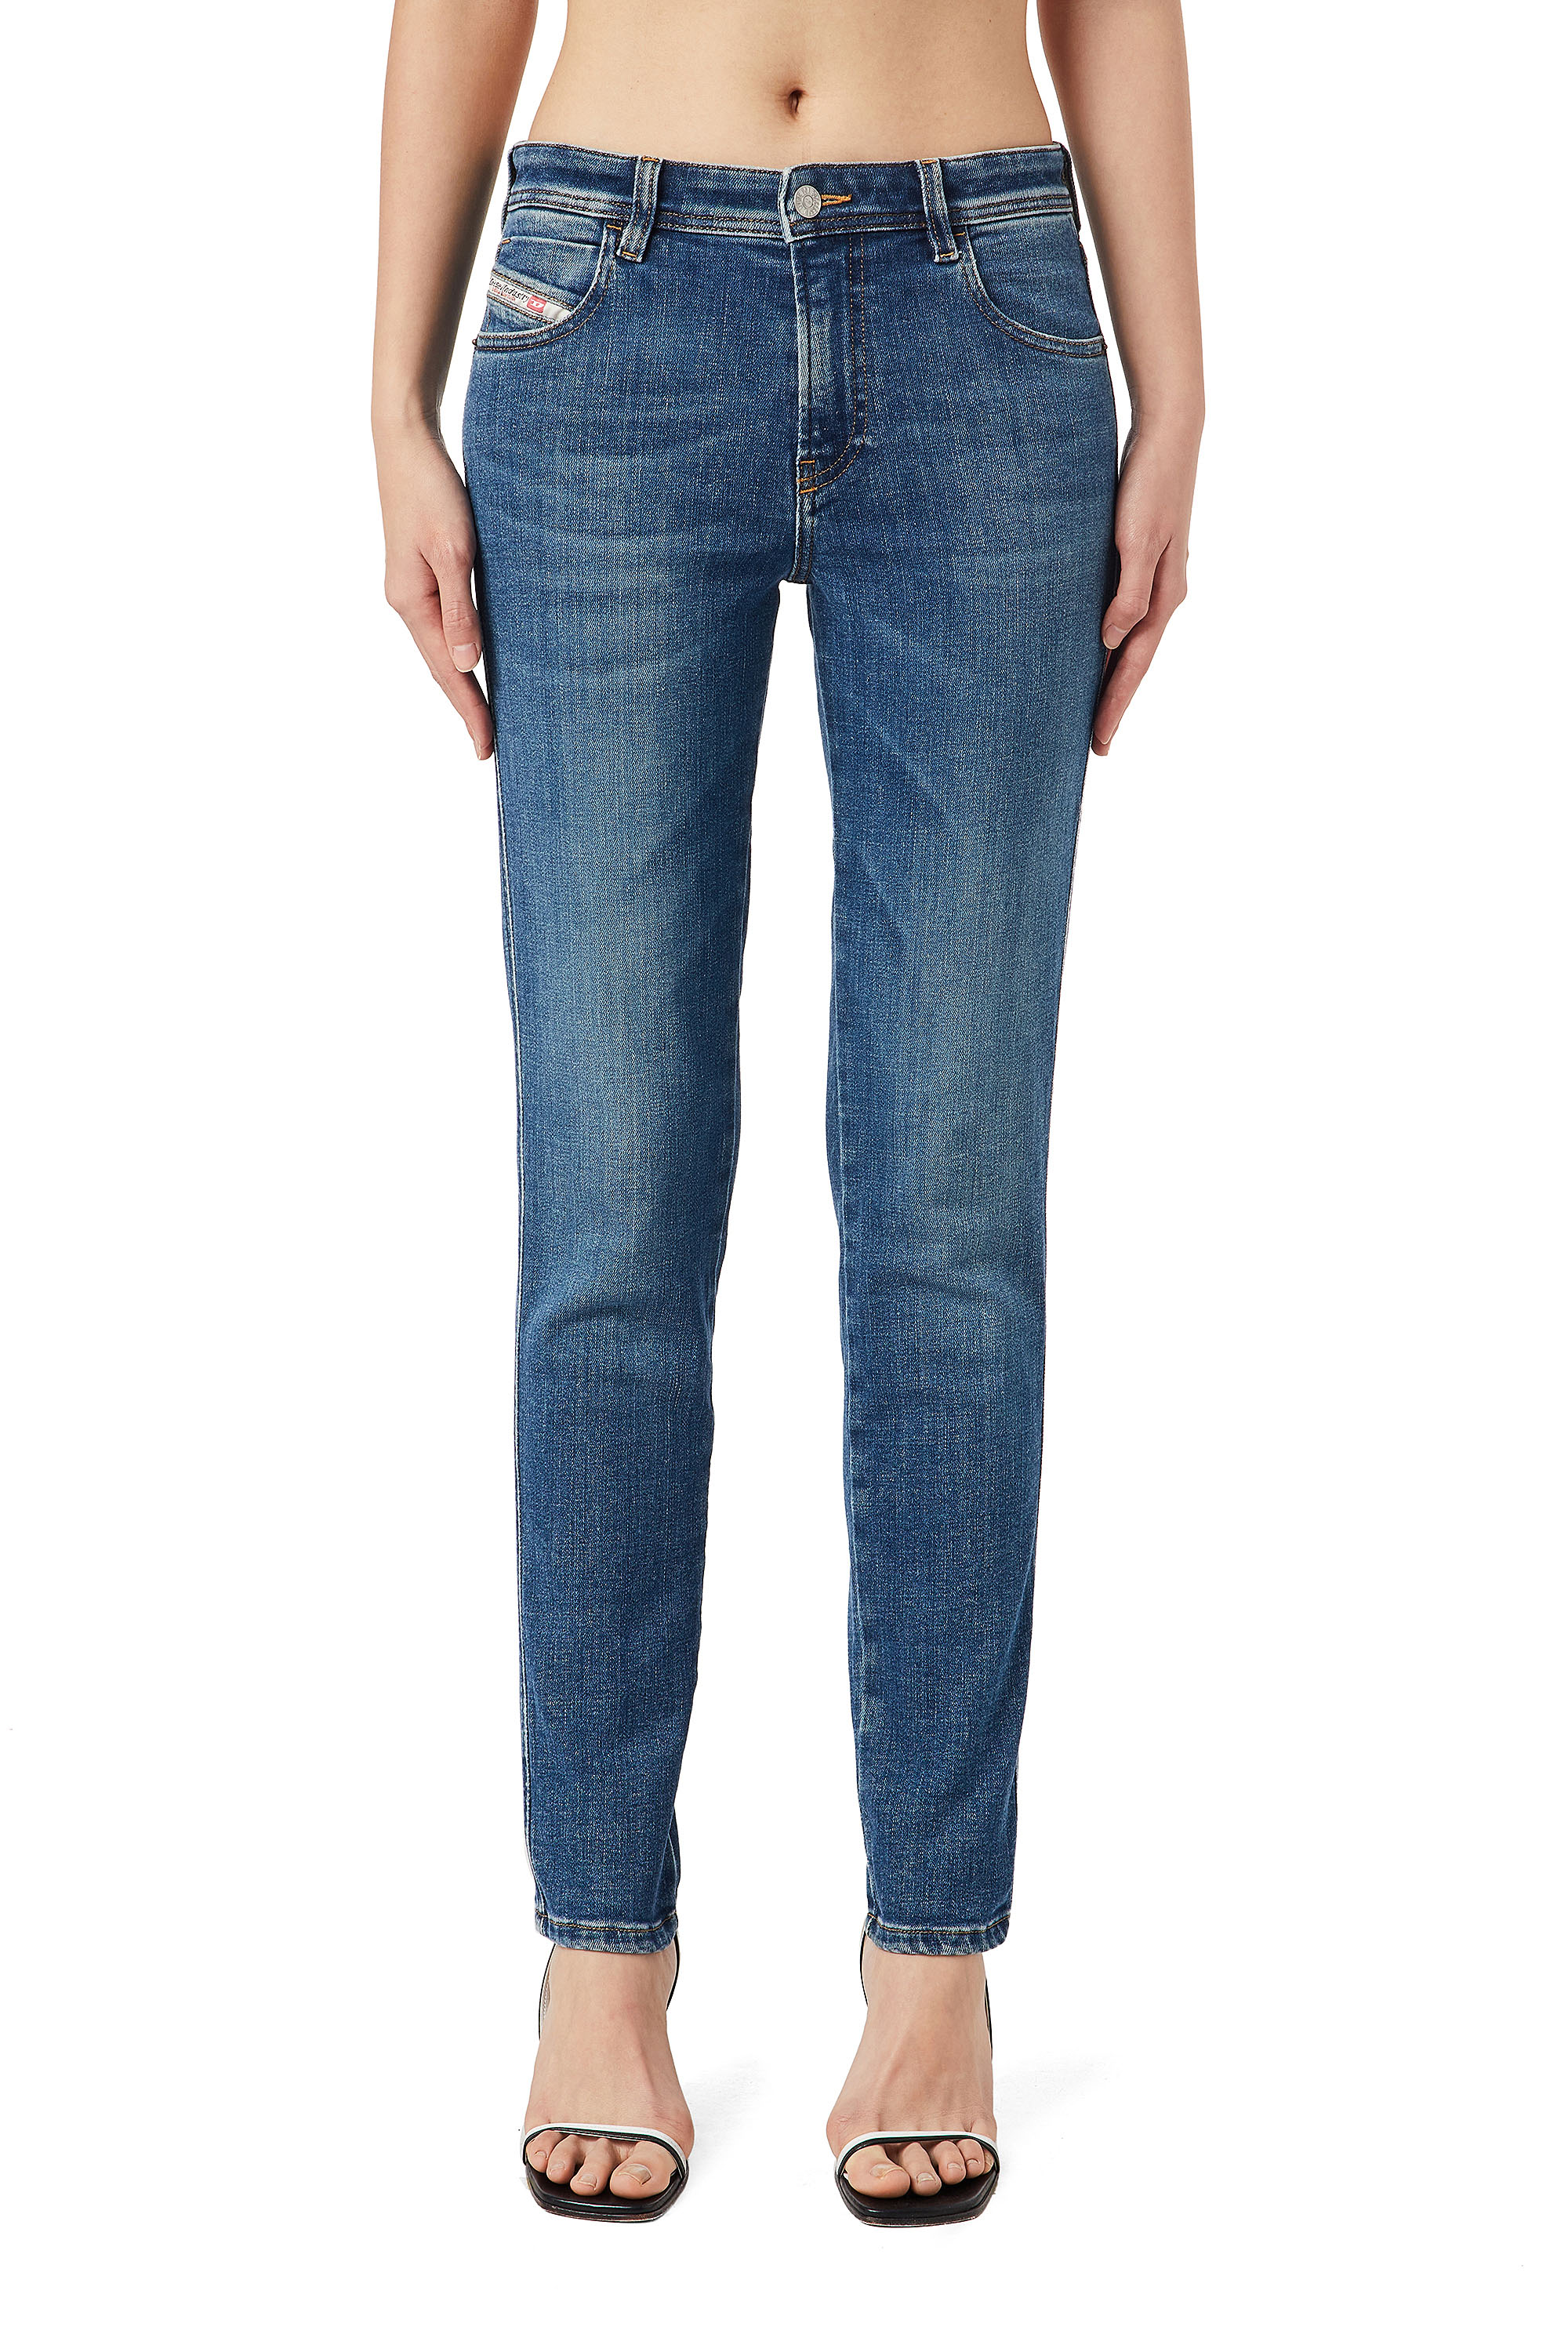 2015 BABHILA 09C59 Skinny Jeans, Medium blue - Jeans